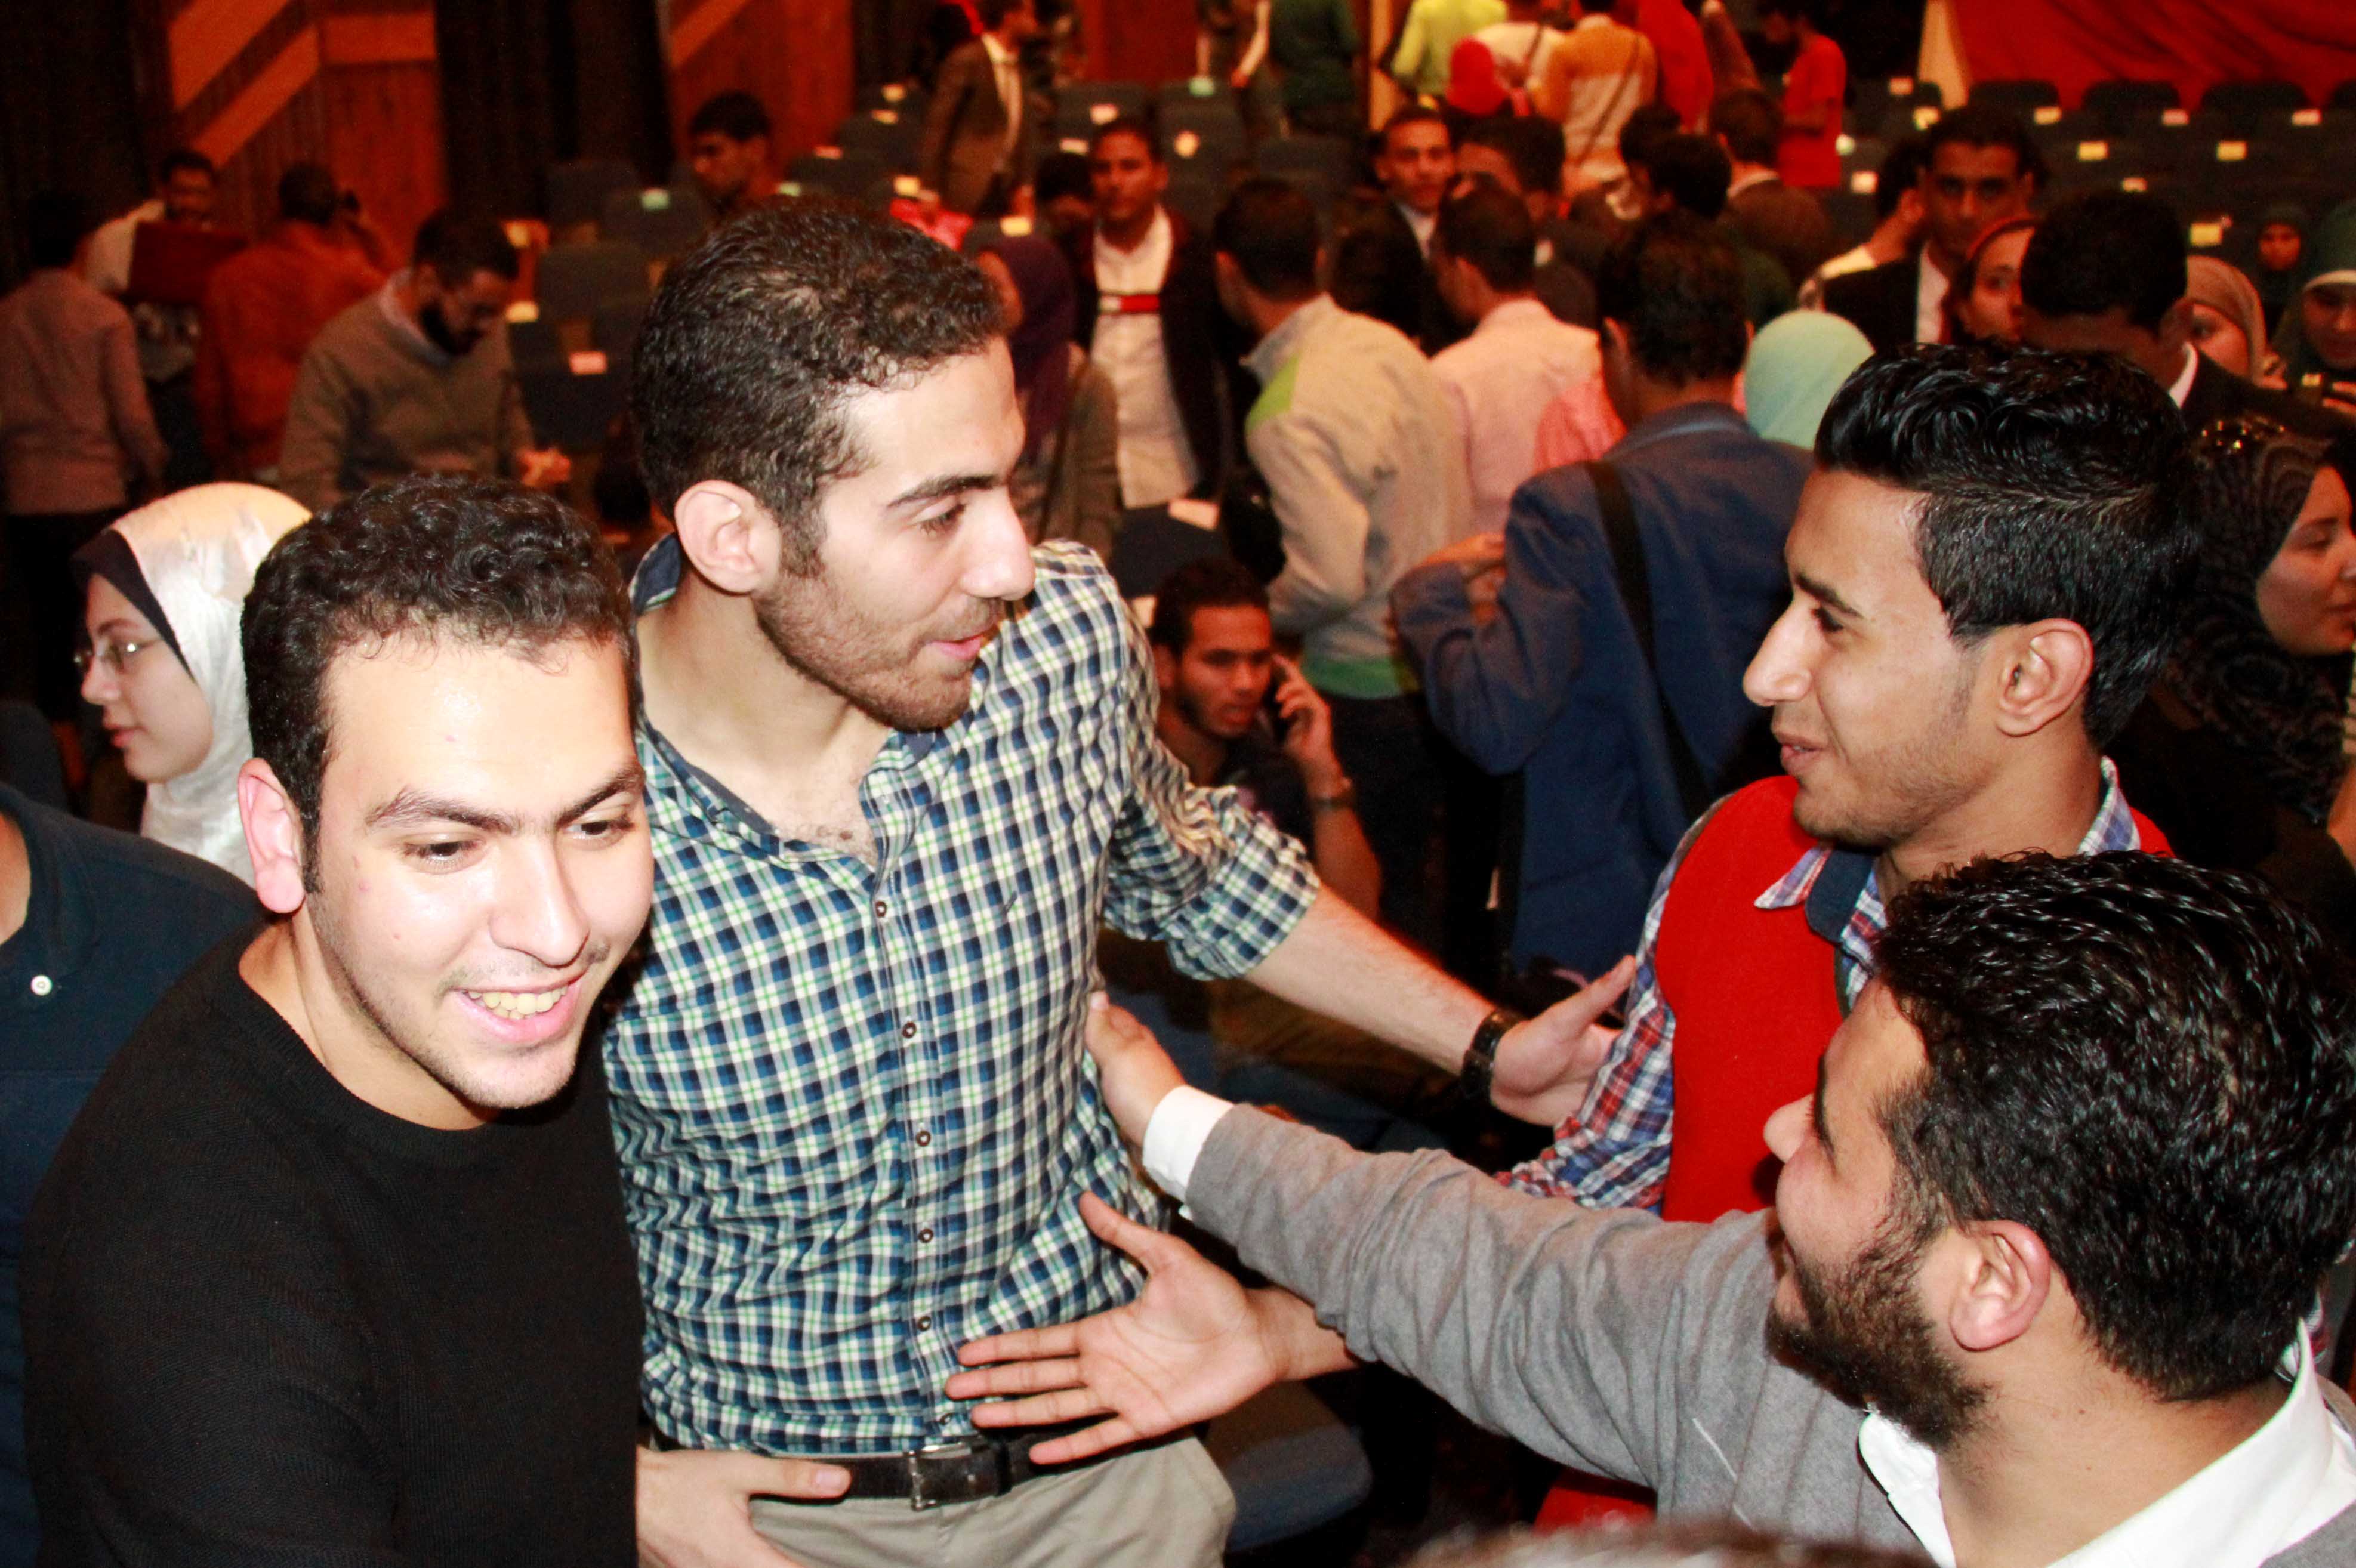 Cairo University Student Union elections, Nov. 22. Photo by Mousa el-Zarif / Aswat Masriya